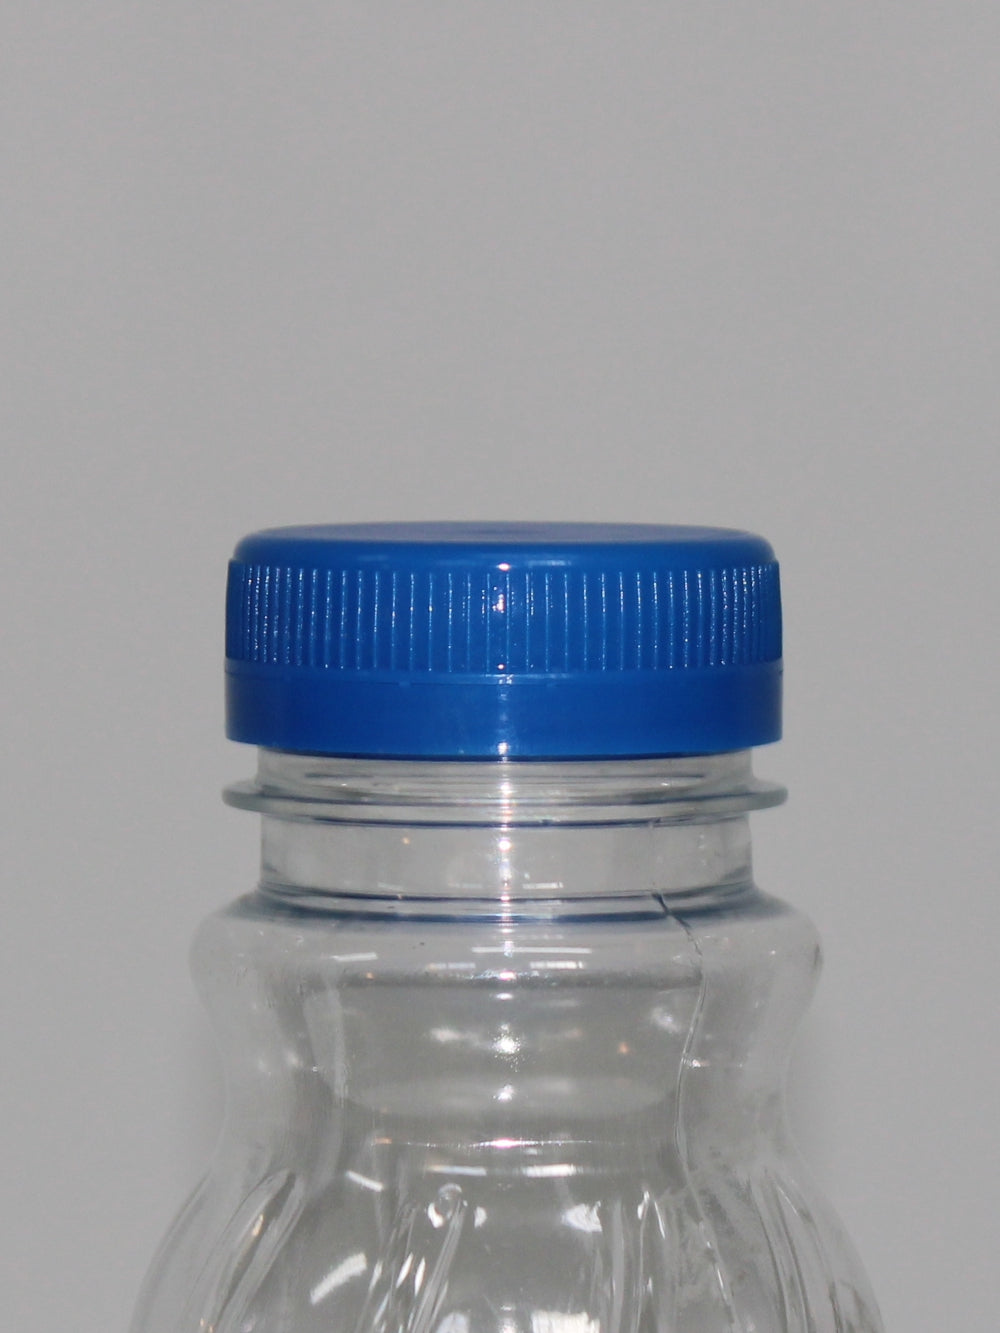 350ml Classic Juice PET Bottle - (Box of 140 units) - Packnet SA